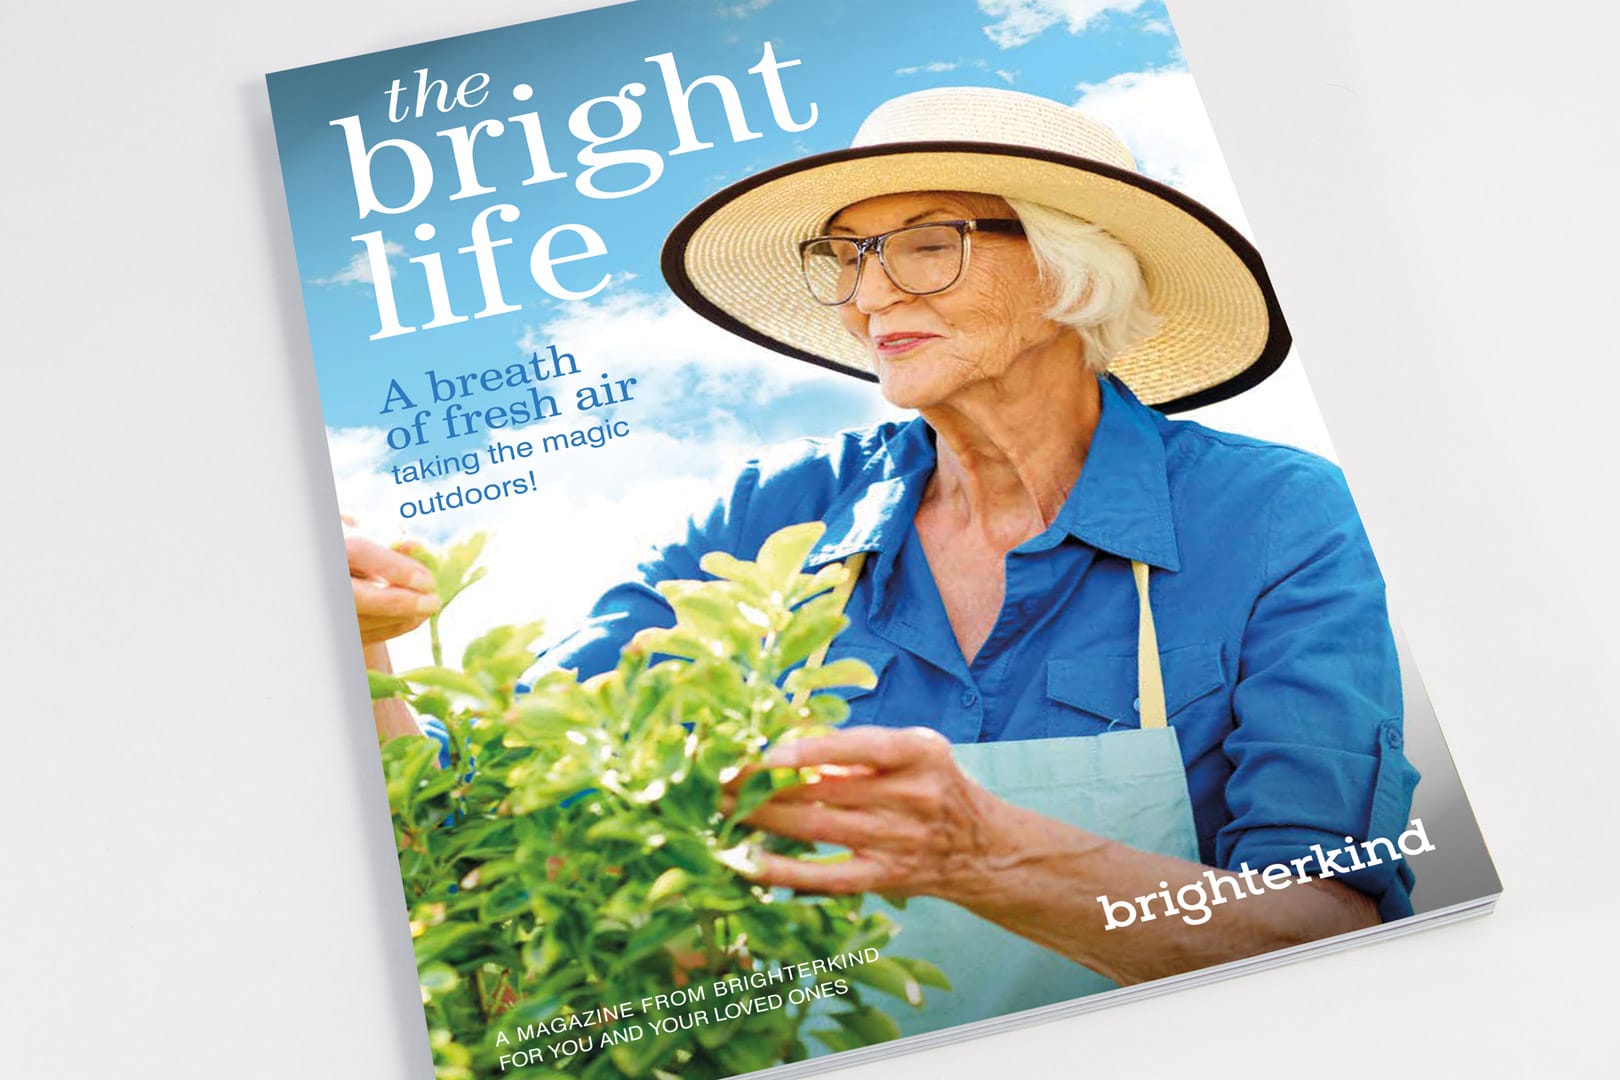 brighterkind magazine front cover design